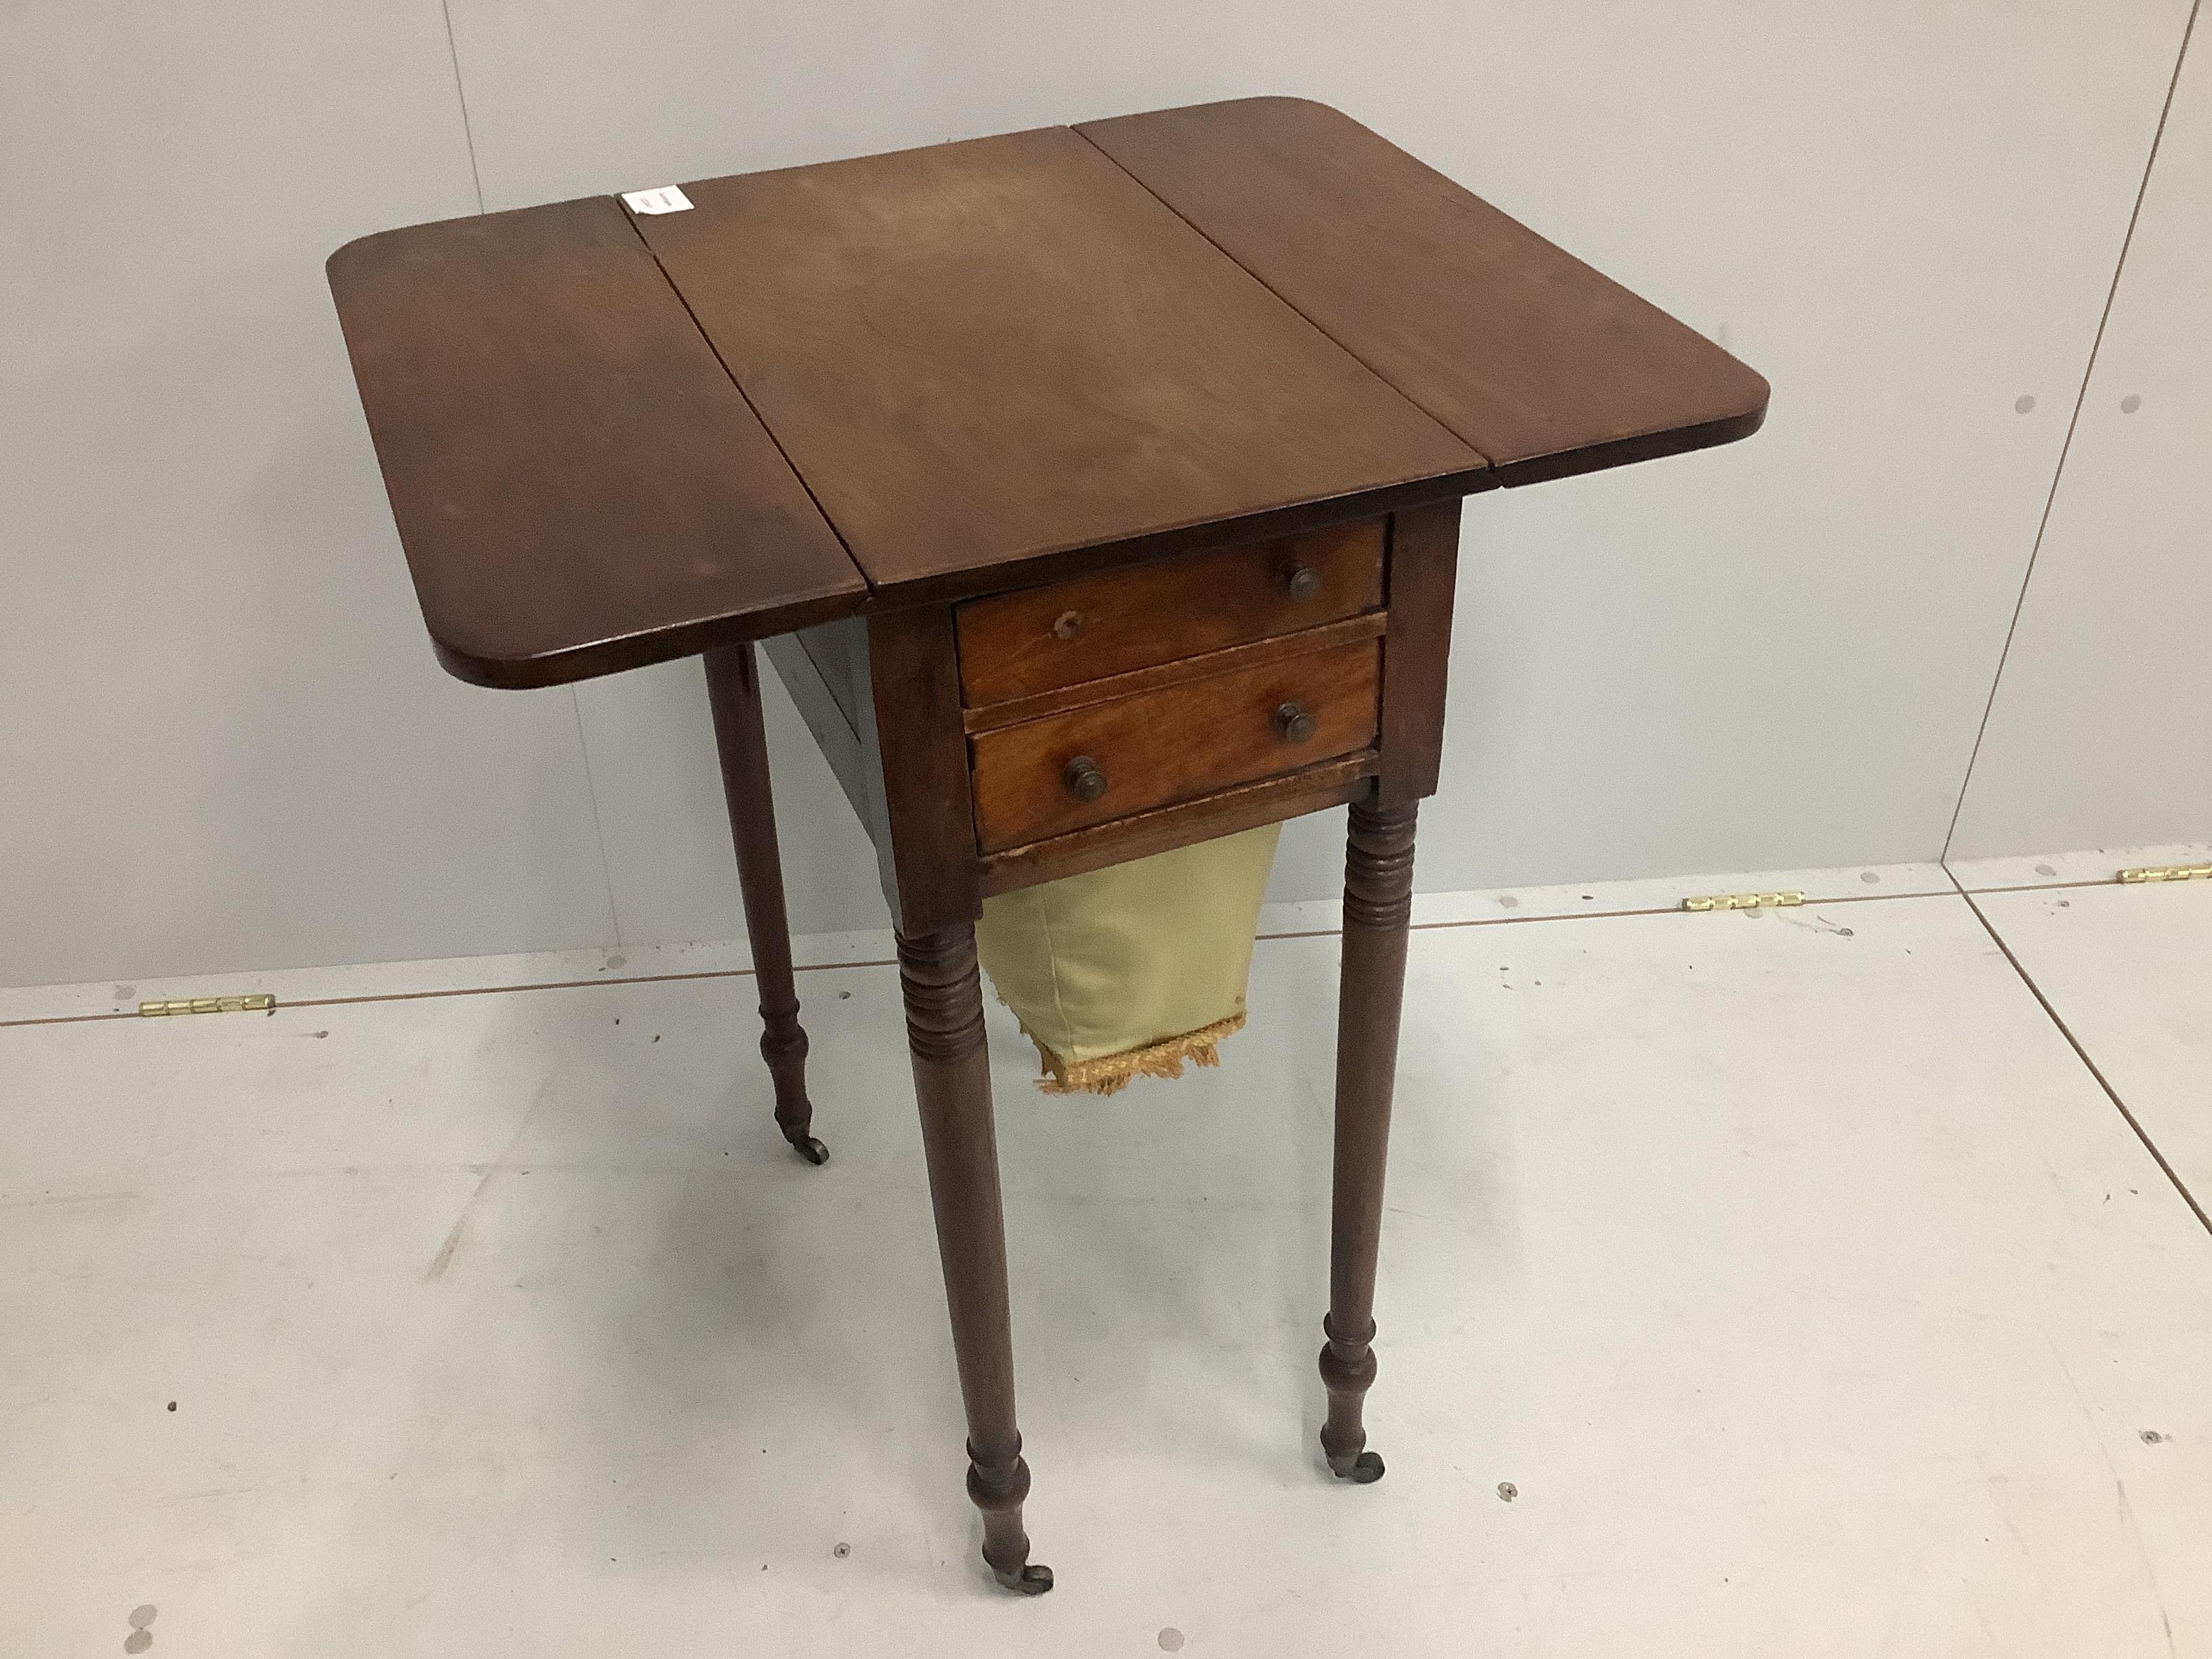 A Regency mahogany drop flap work table, width 50cm, depth 32cm, height 75cm